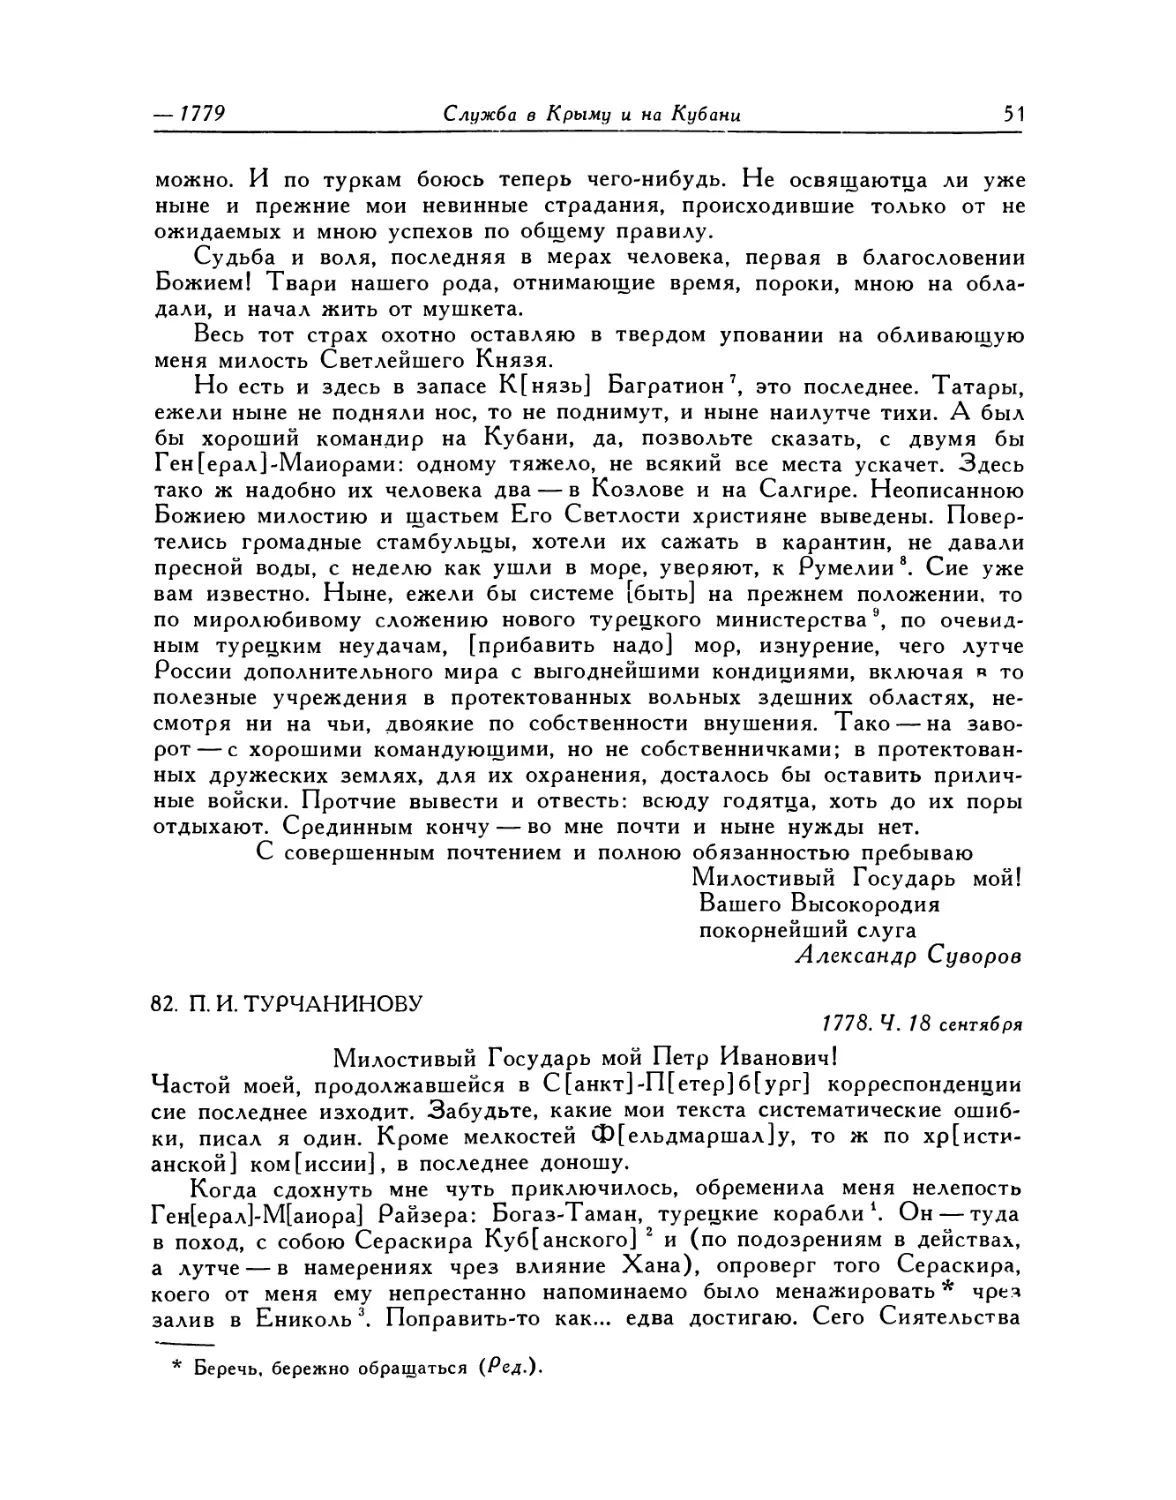 82. П. И. Турчанинову. 18.IX.1778